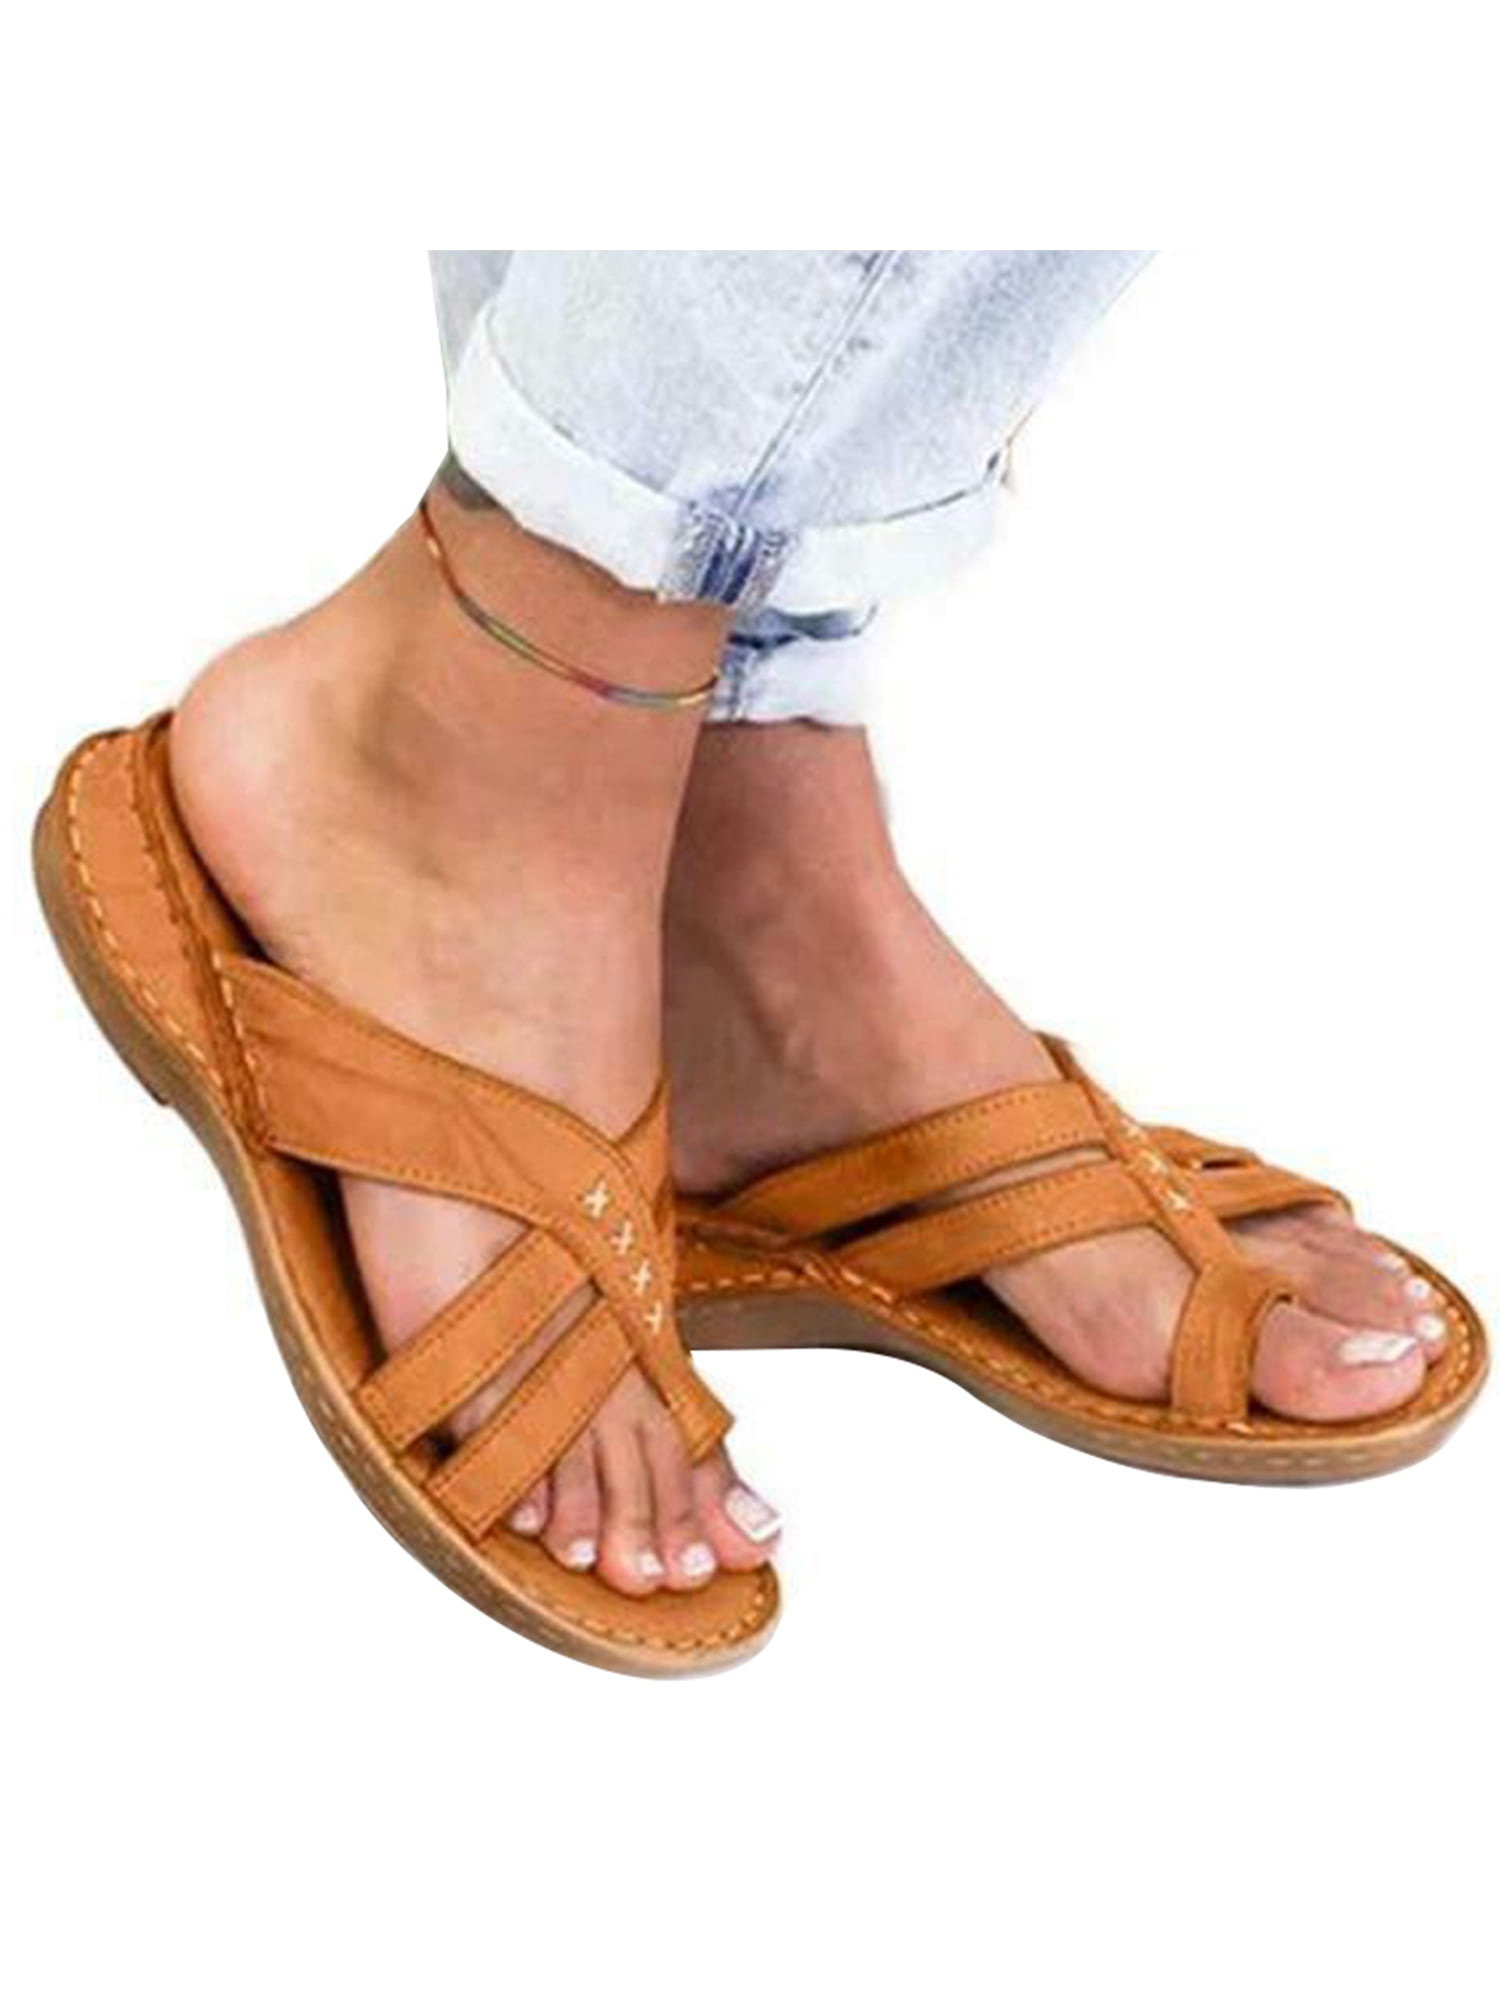 orthotic sandals